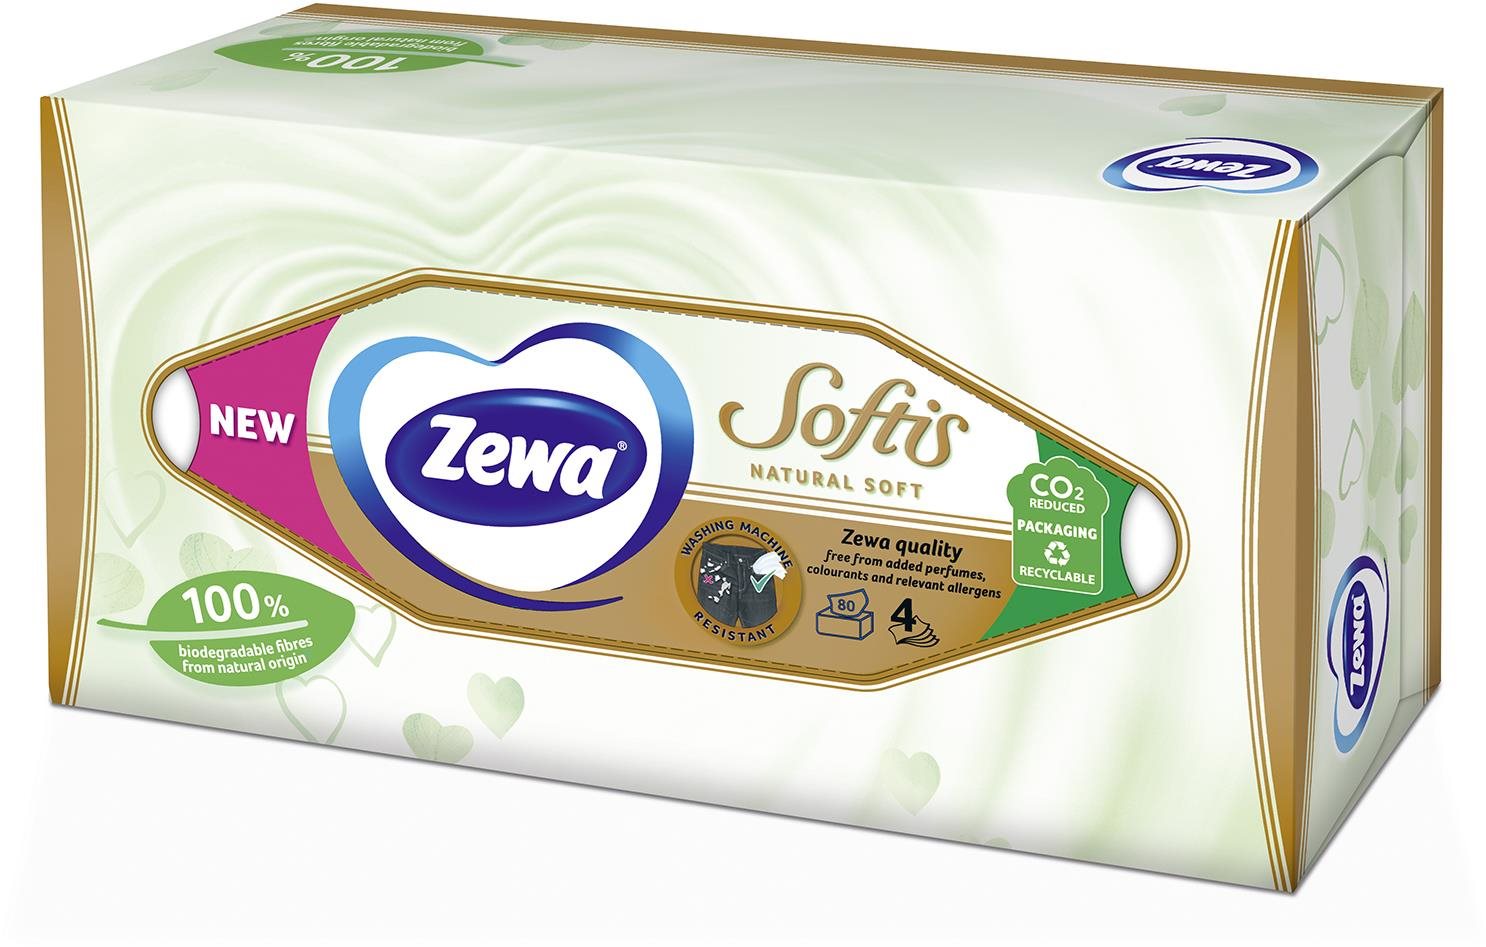 Papírzsebkendő ZEWA Softis Natural Soft doboz 80 db